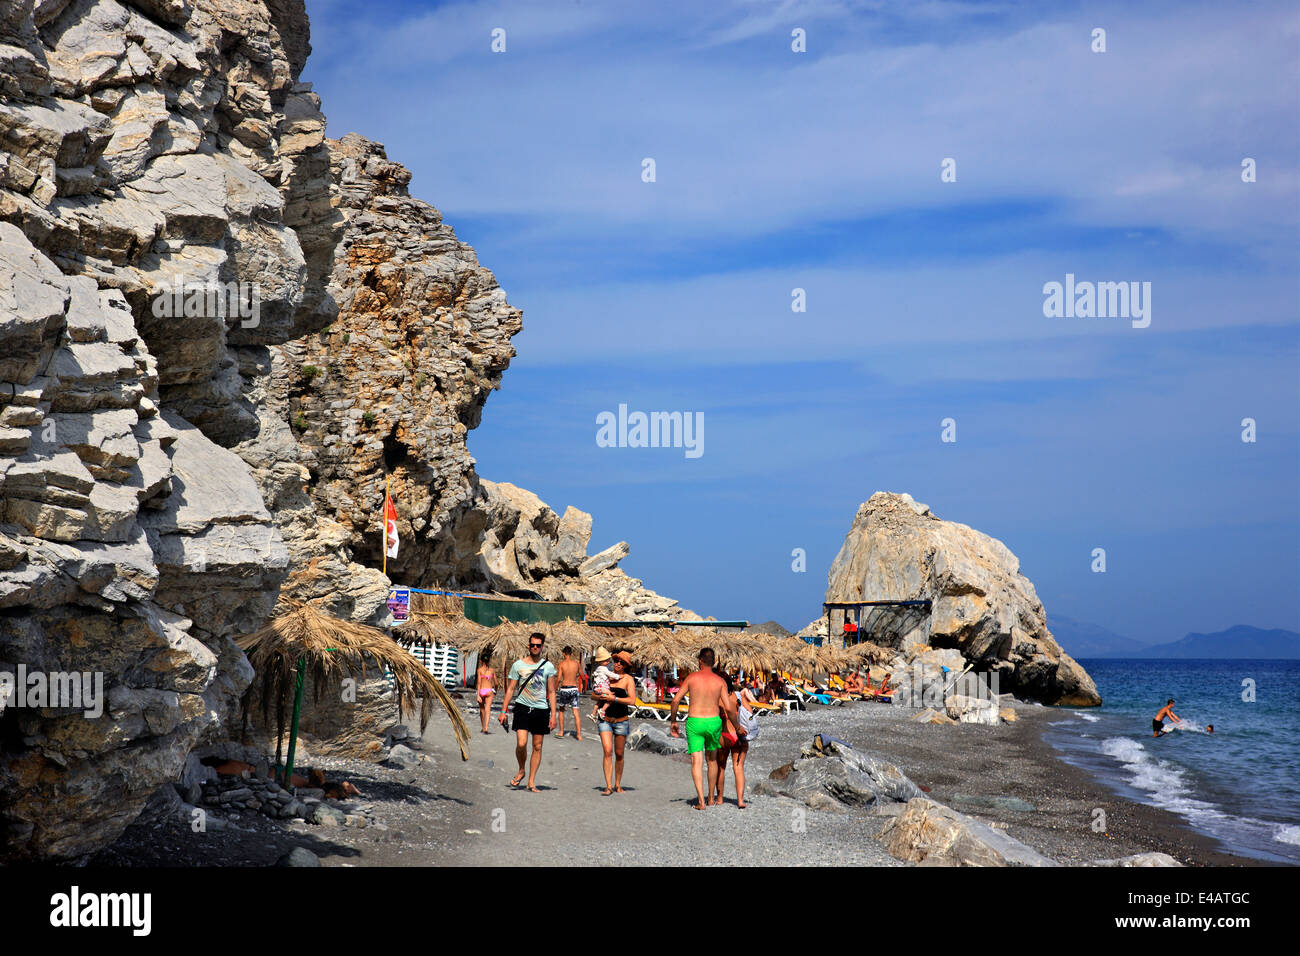 Therma (or 'Empros Thermes') beach, Kos island, Dodecanese, Aegean sea, Greece. Stock Photo